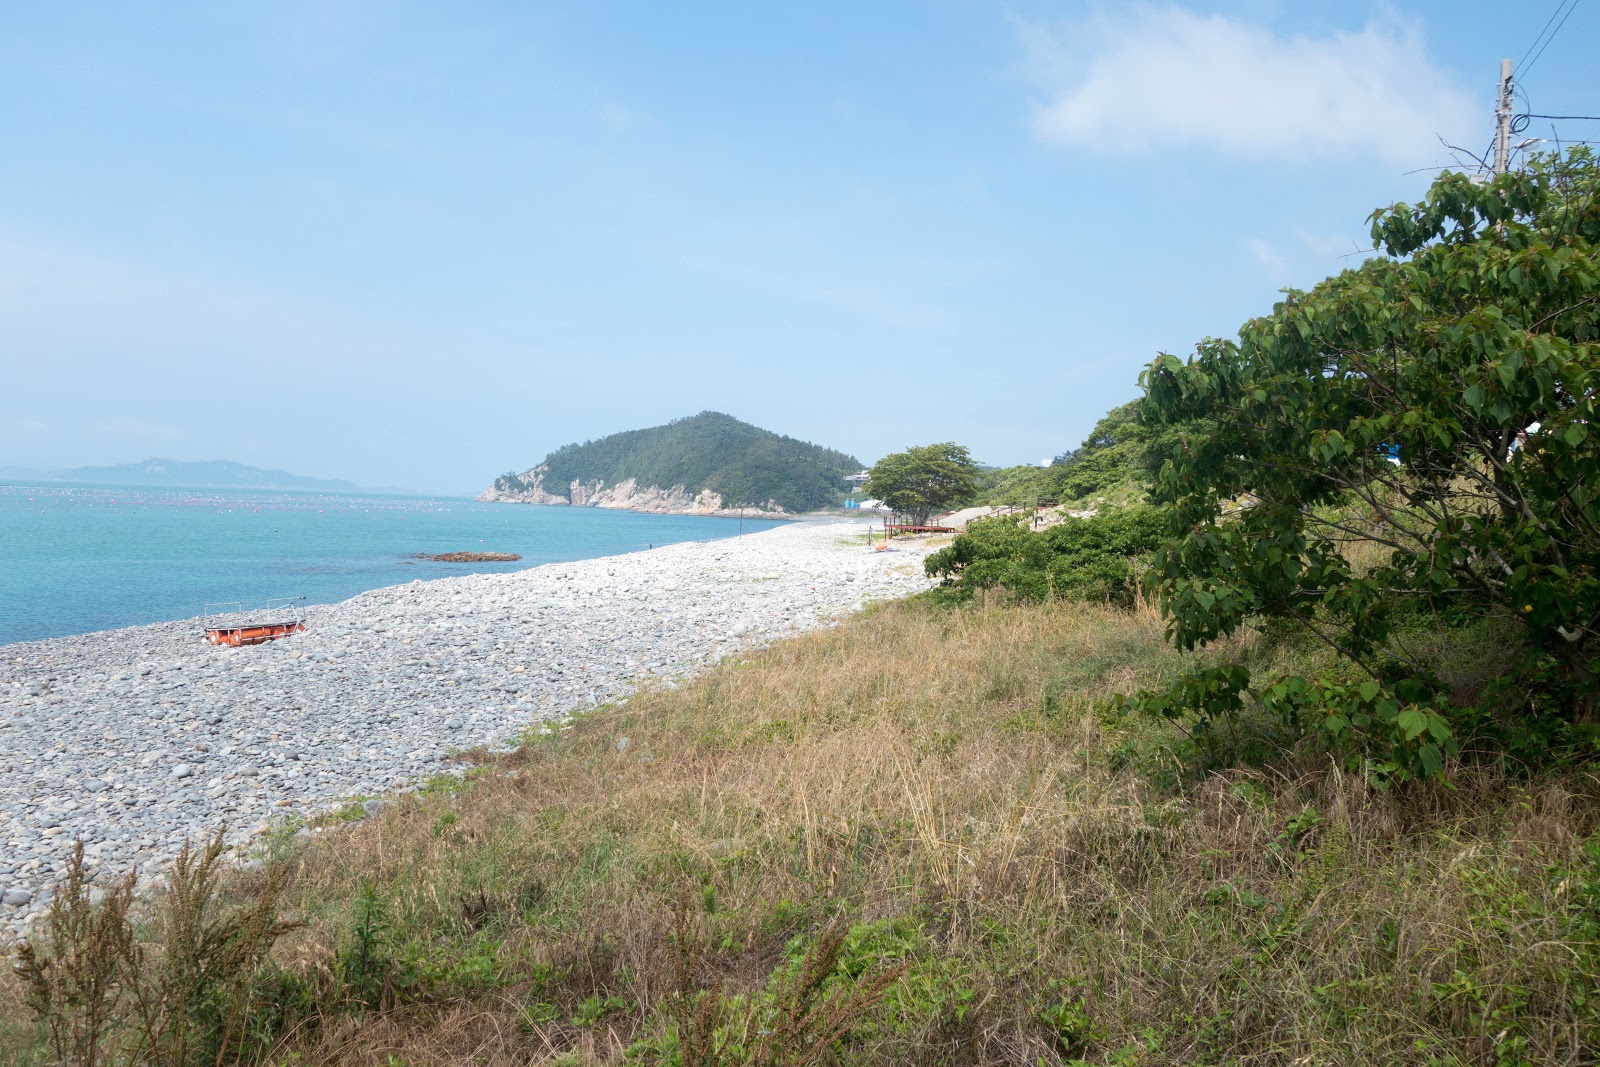 Fotografie cu Jeongdori Gugyedeung Beach și peisajul său frumos